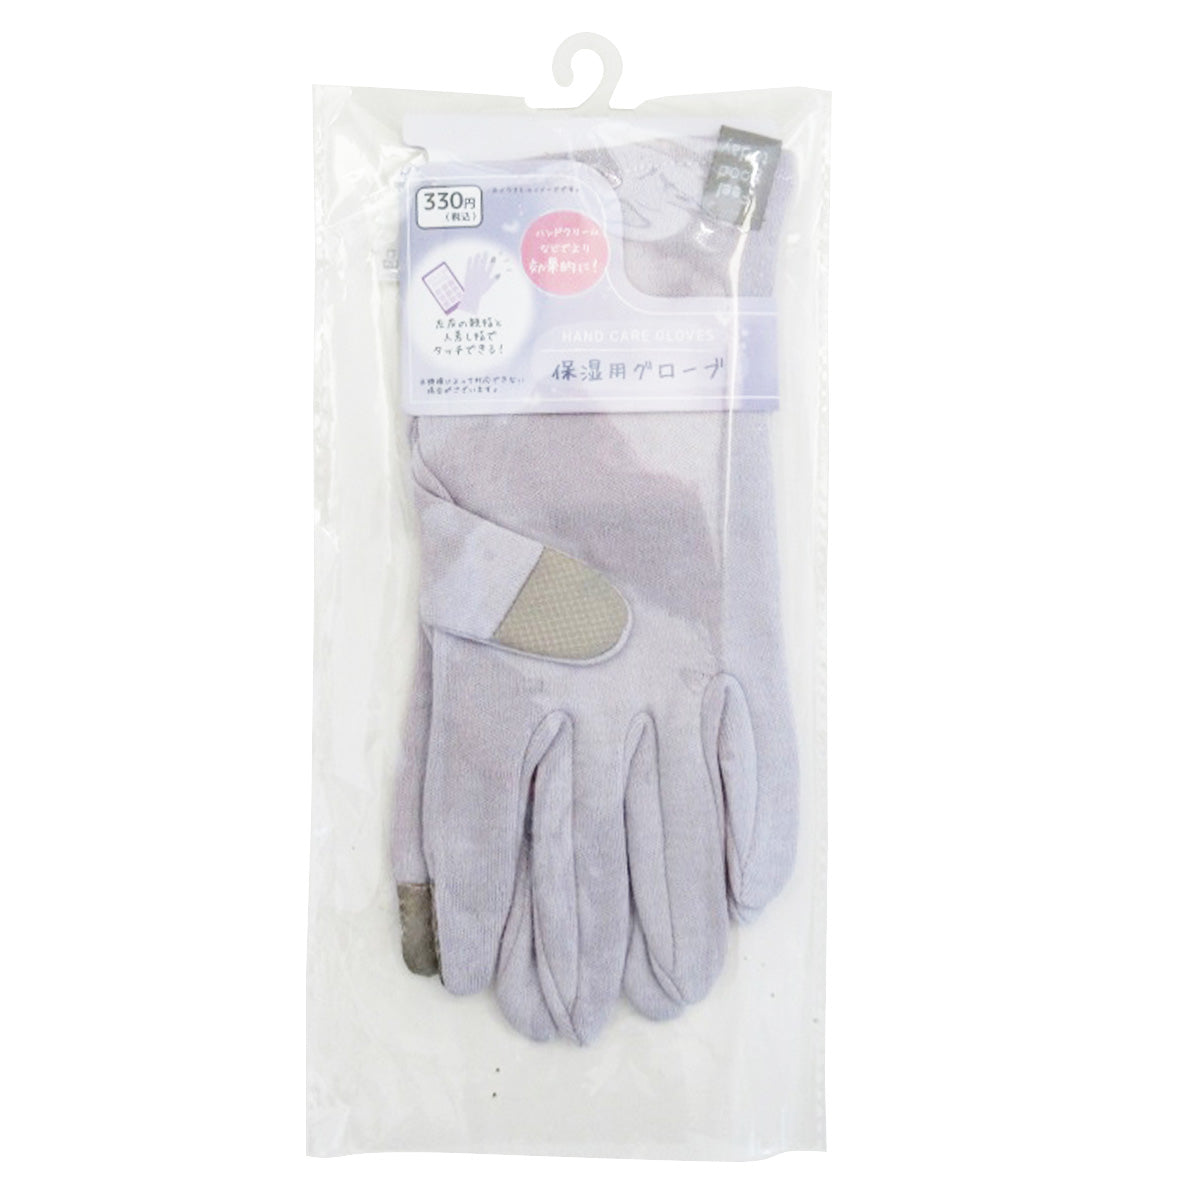 【OUTLET】保湿用グローブ 手袋 乾燥対策 ラベンダー 359655